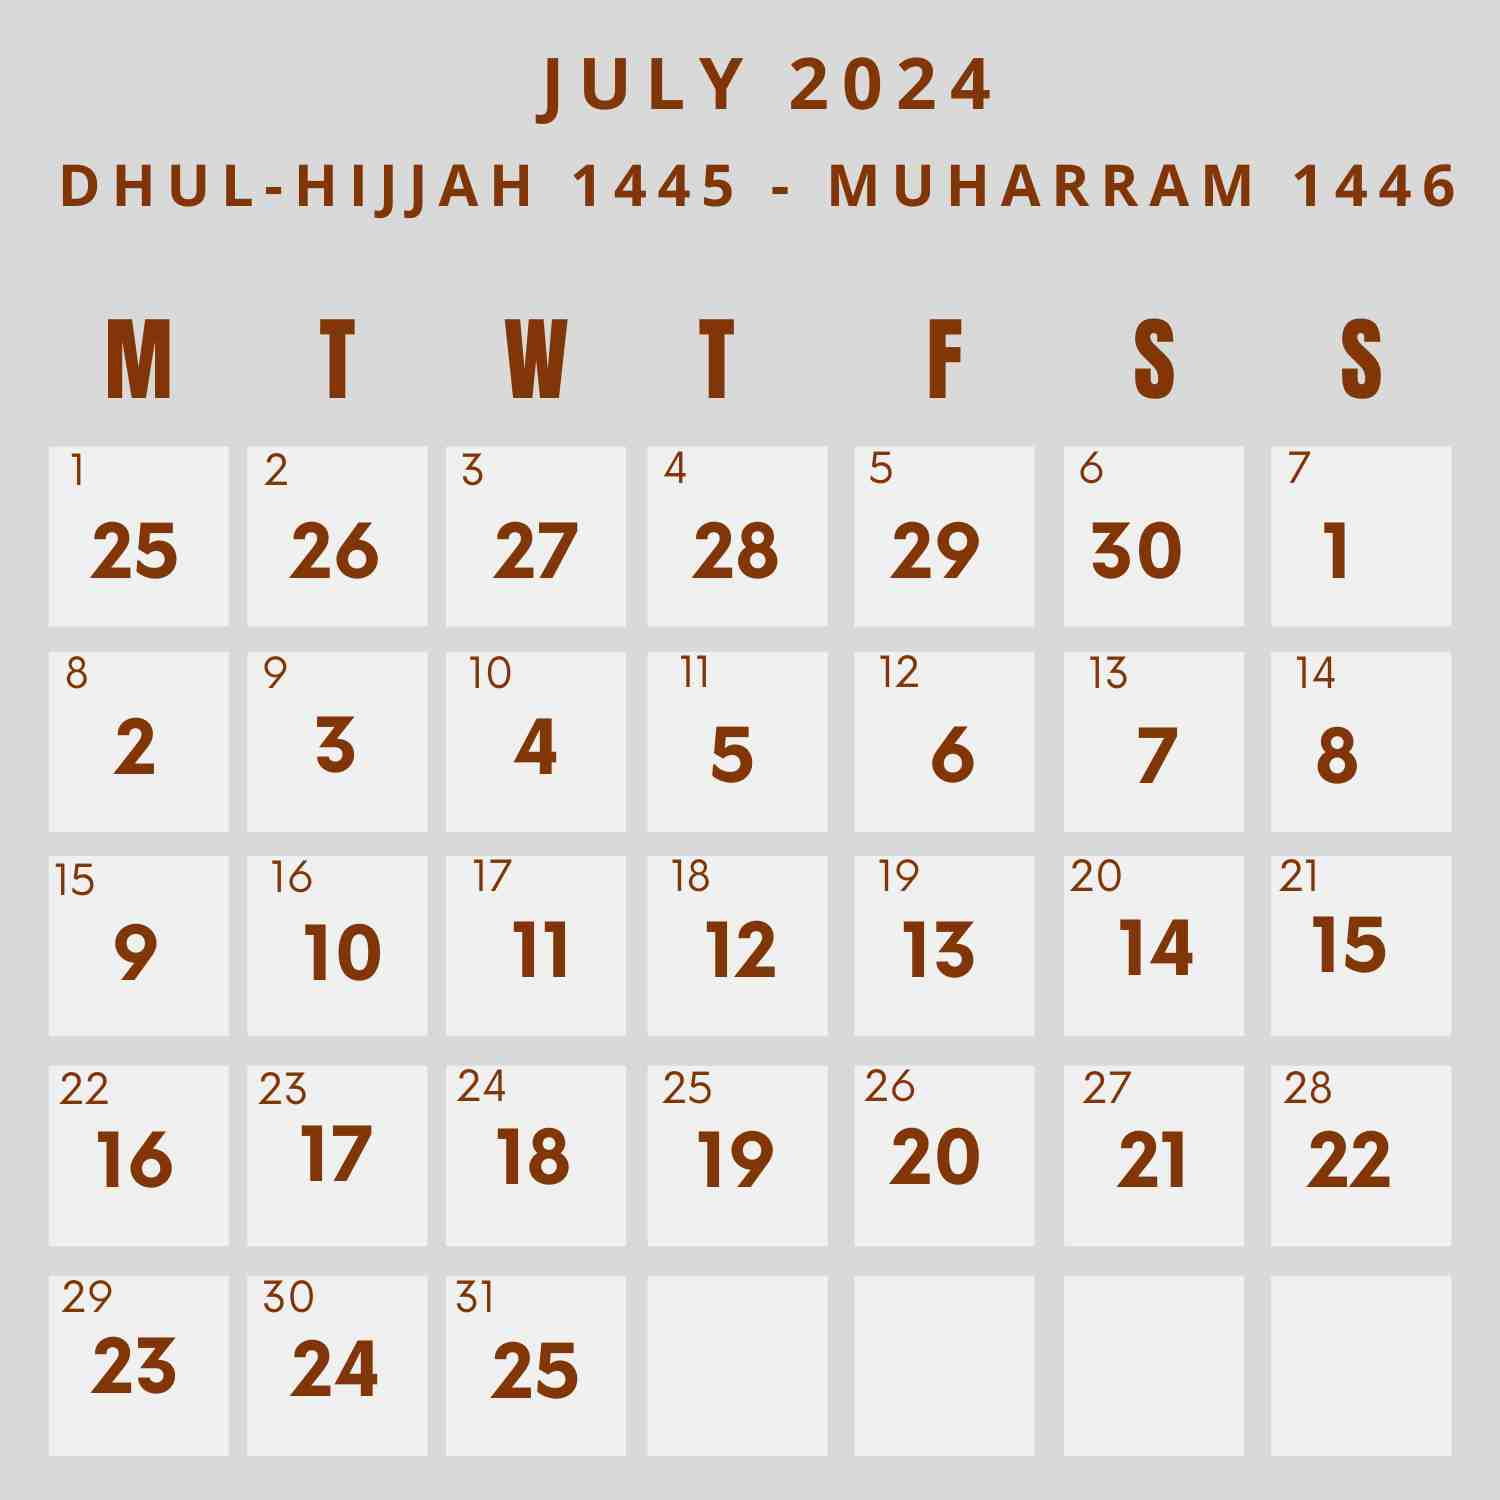 Islamic Calendar 2024 - Khwajadarbar pertaining to 5 July 2024 In Islamic Calendar